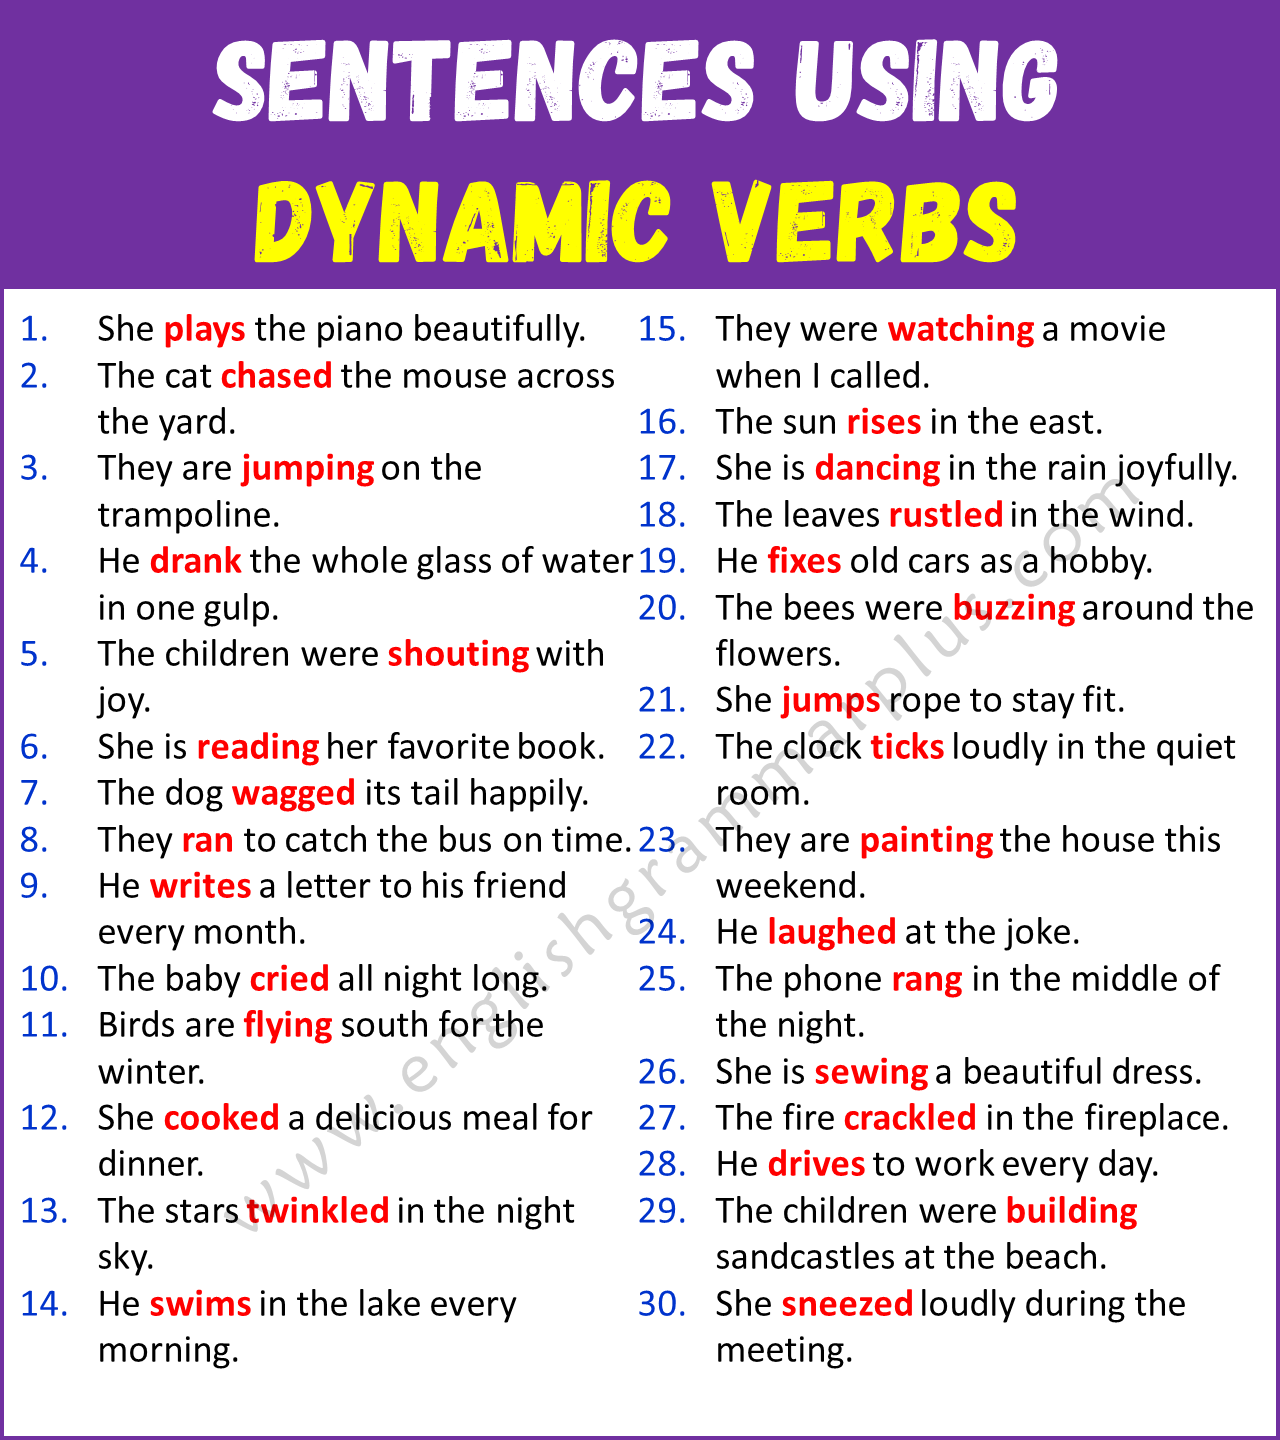 Example Sentences Using Dynamic Verbs